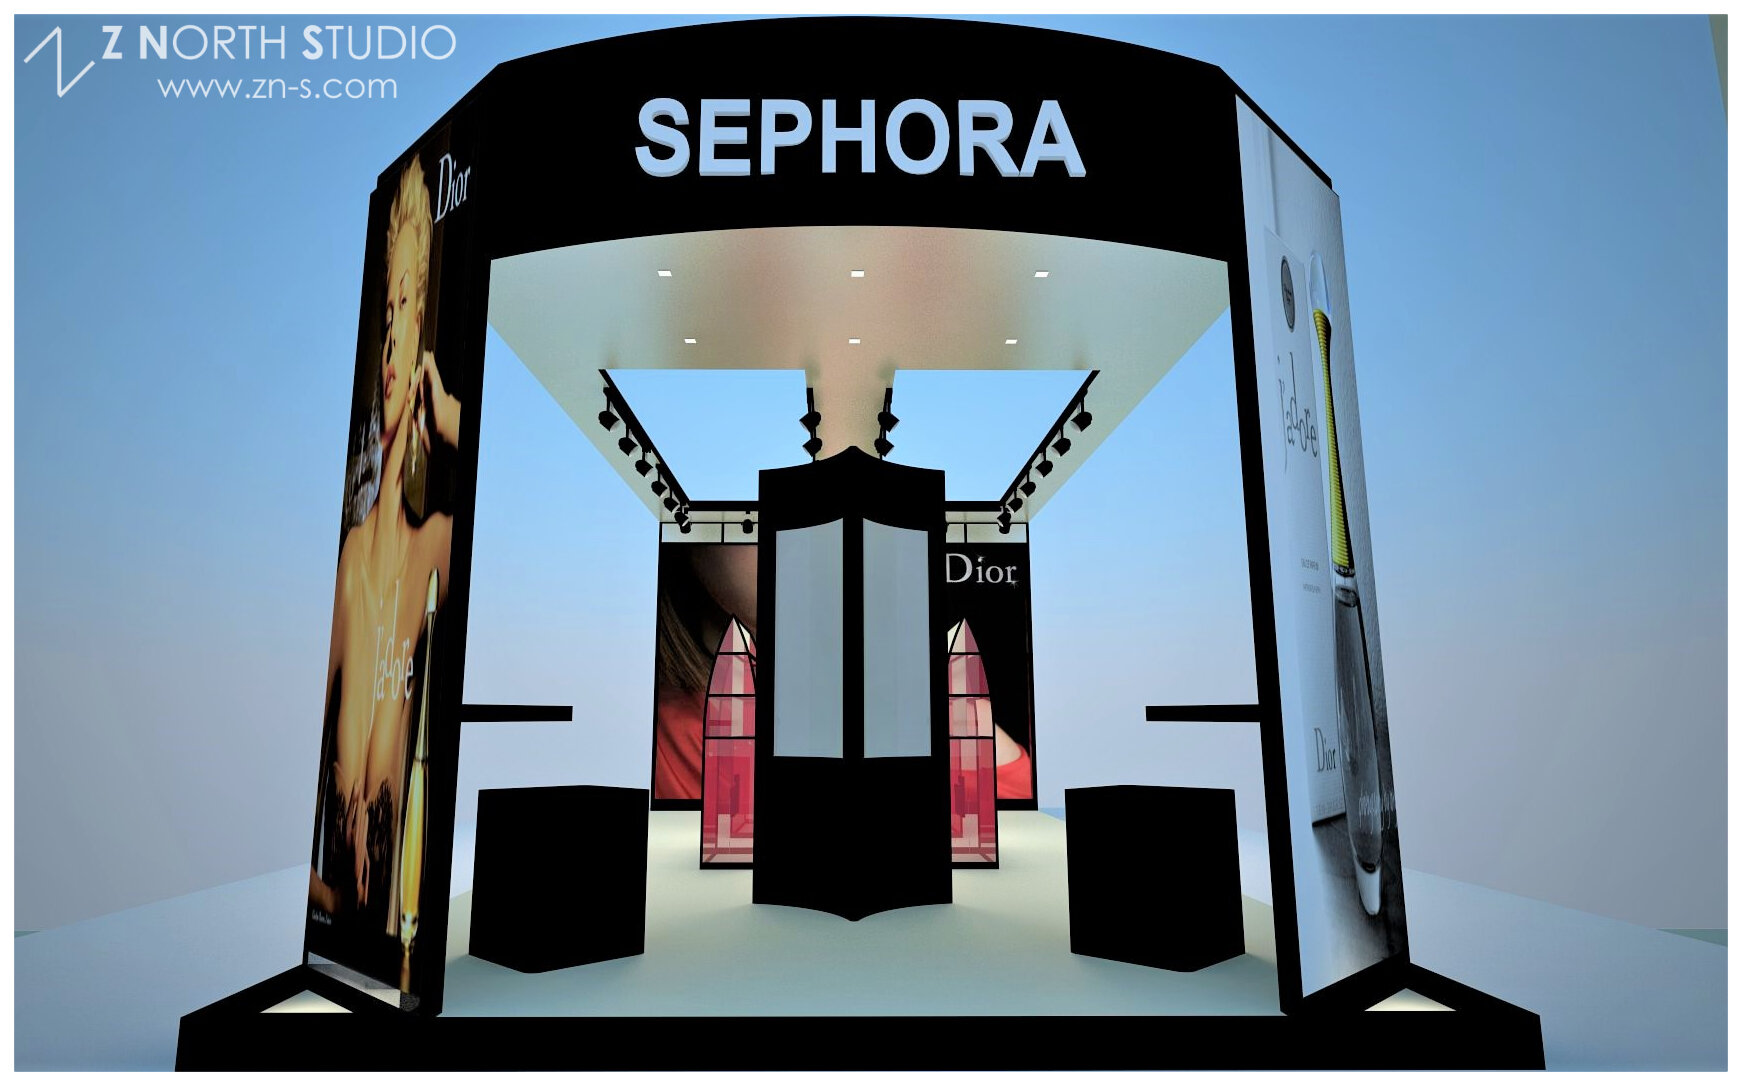 SEPHORA - www.sephora.com - Interior design by Z North Studio (3).jpg